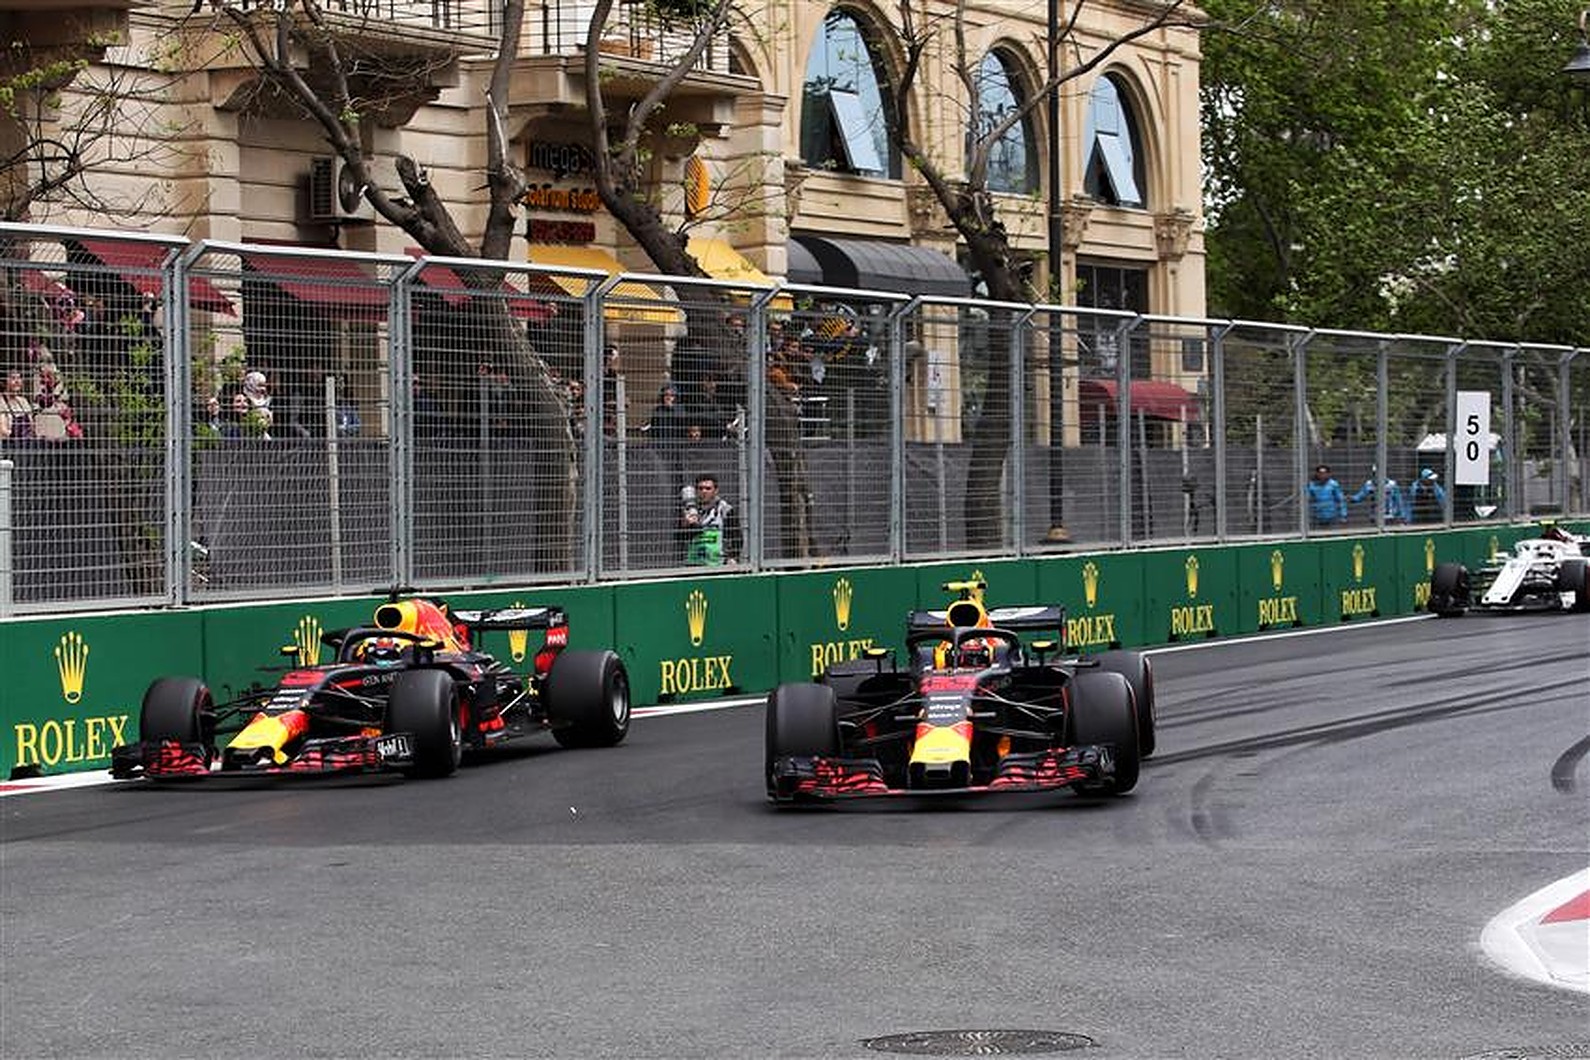 Daniel Ricciardo and Max Verstappen at Red Bull, Azerbaijan 2018 - Formula1news.co.uk